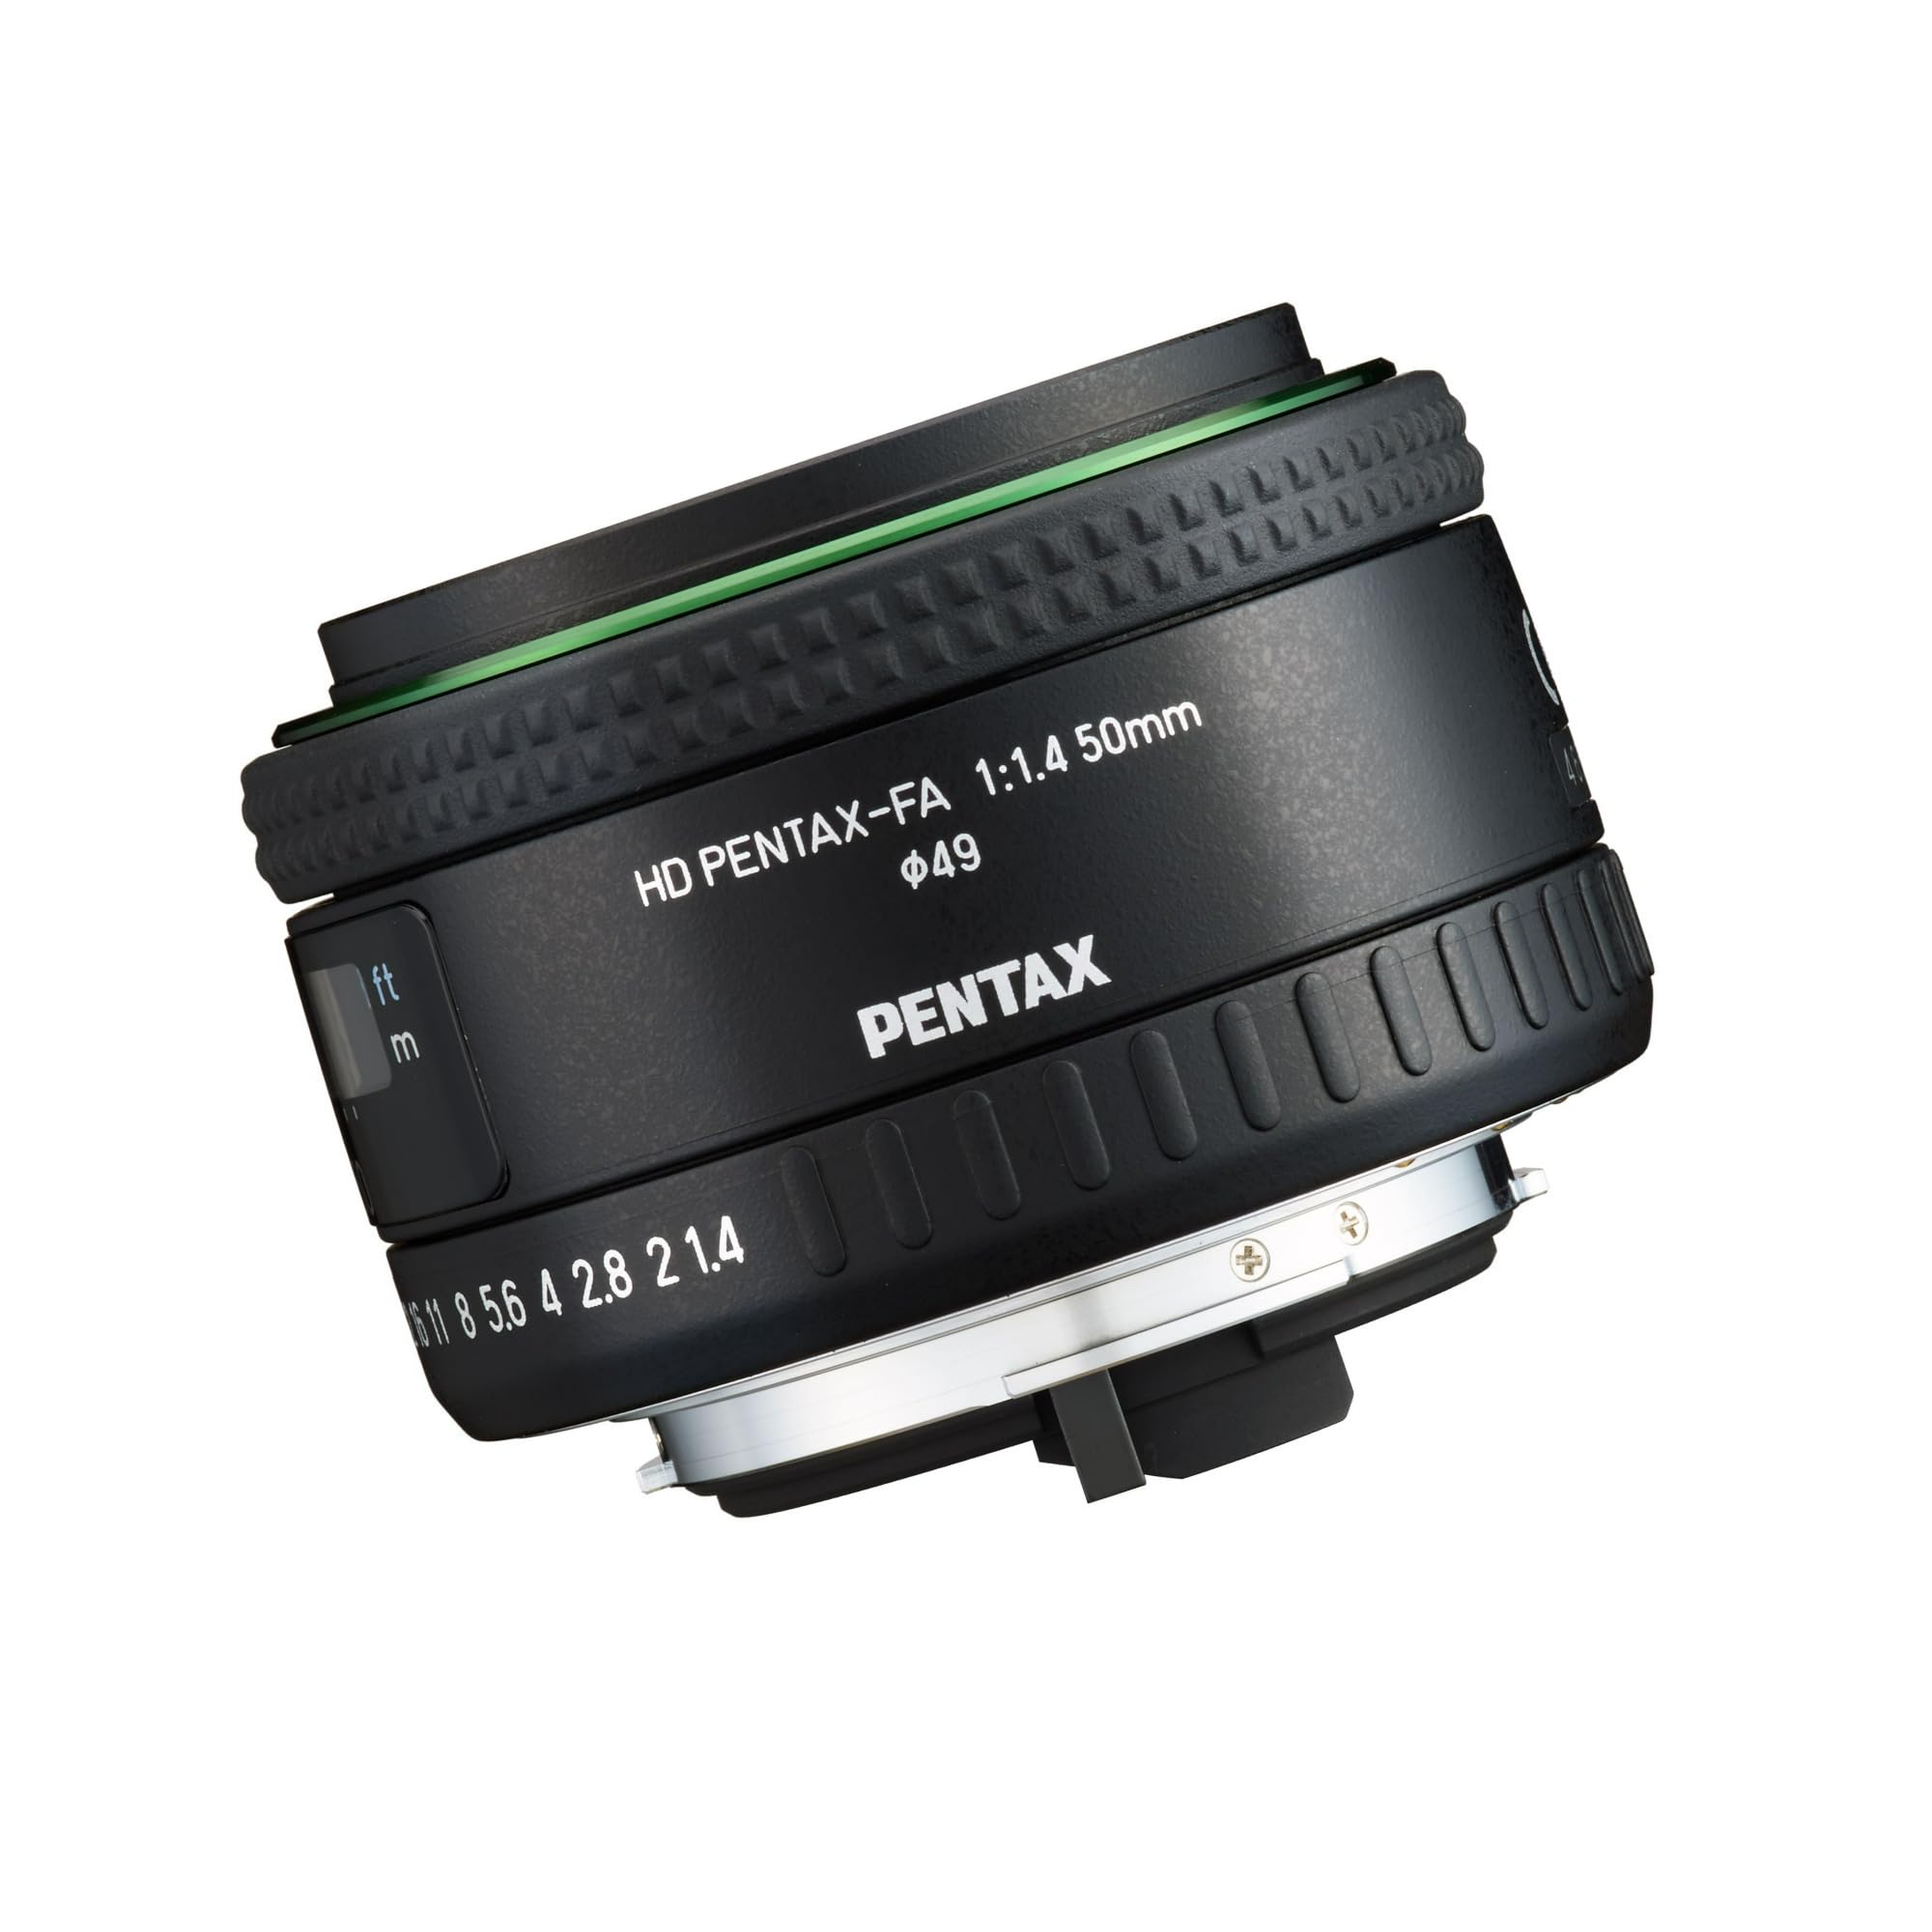 Pentax HD PENTAX-FA 50mmF1.4, Single-Focus, Standard Lens for use with K-Mount Digital SLR Cameras